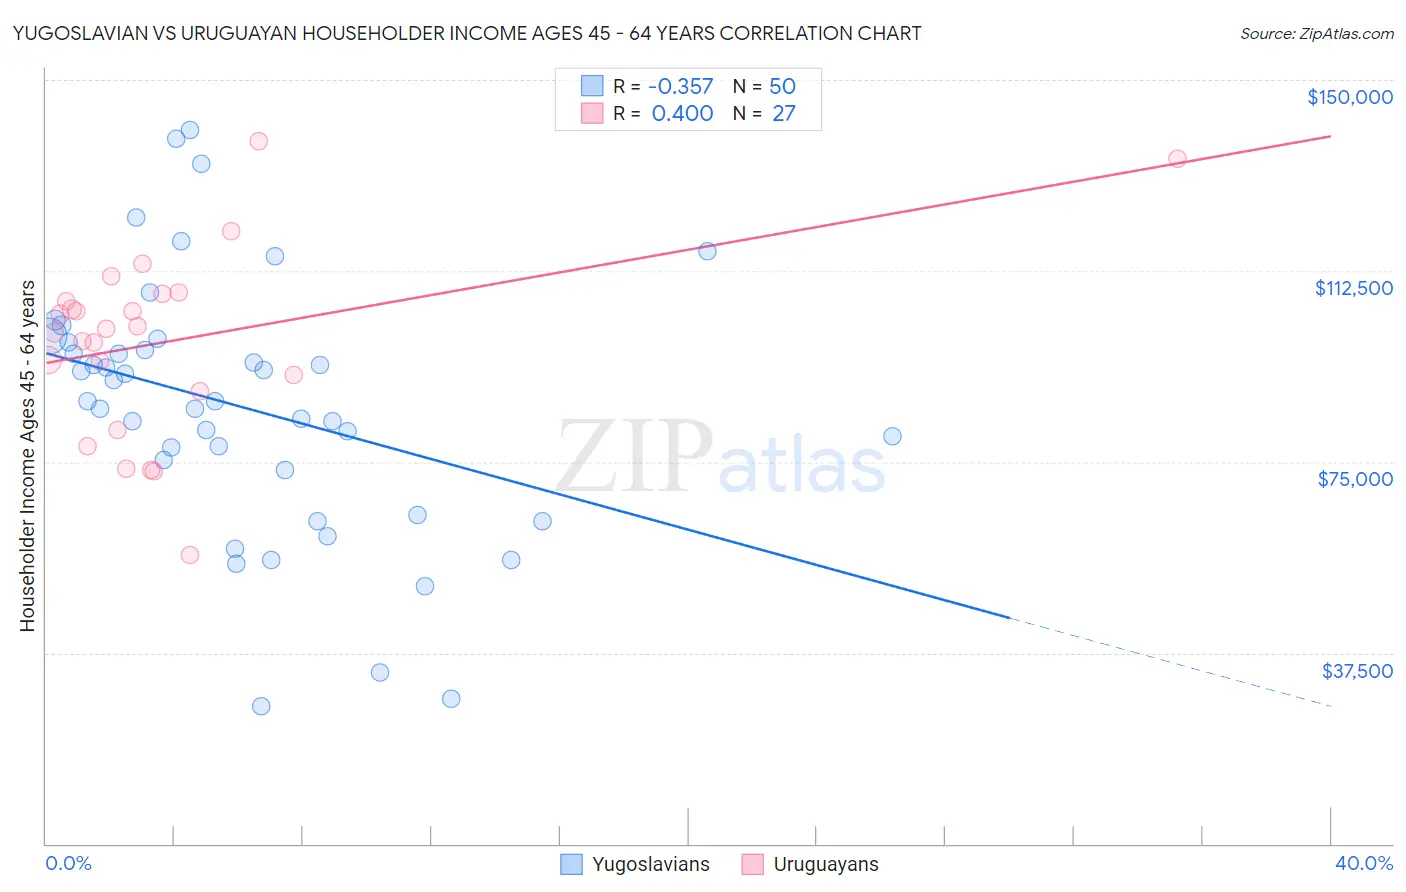 Yugoslavian vs Uruguayan Householder Income Ages 45 - 64 years